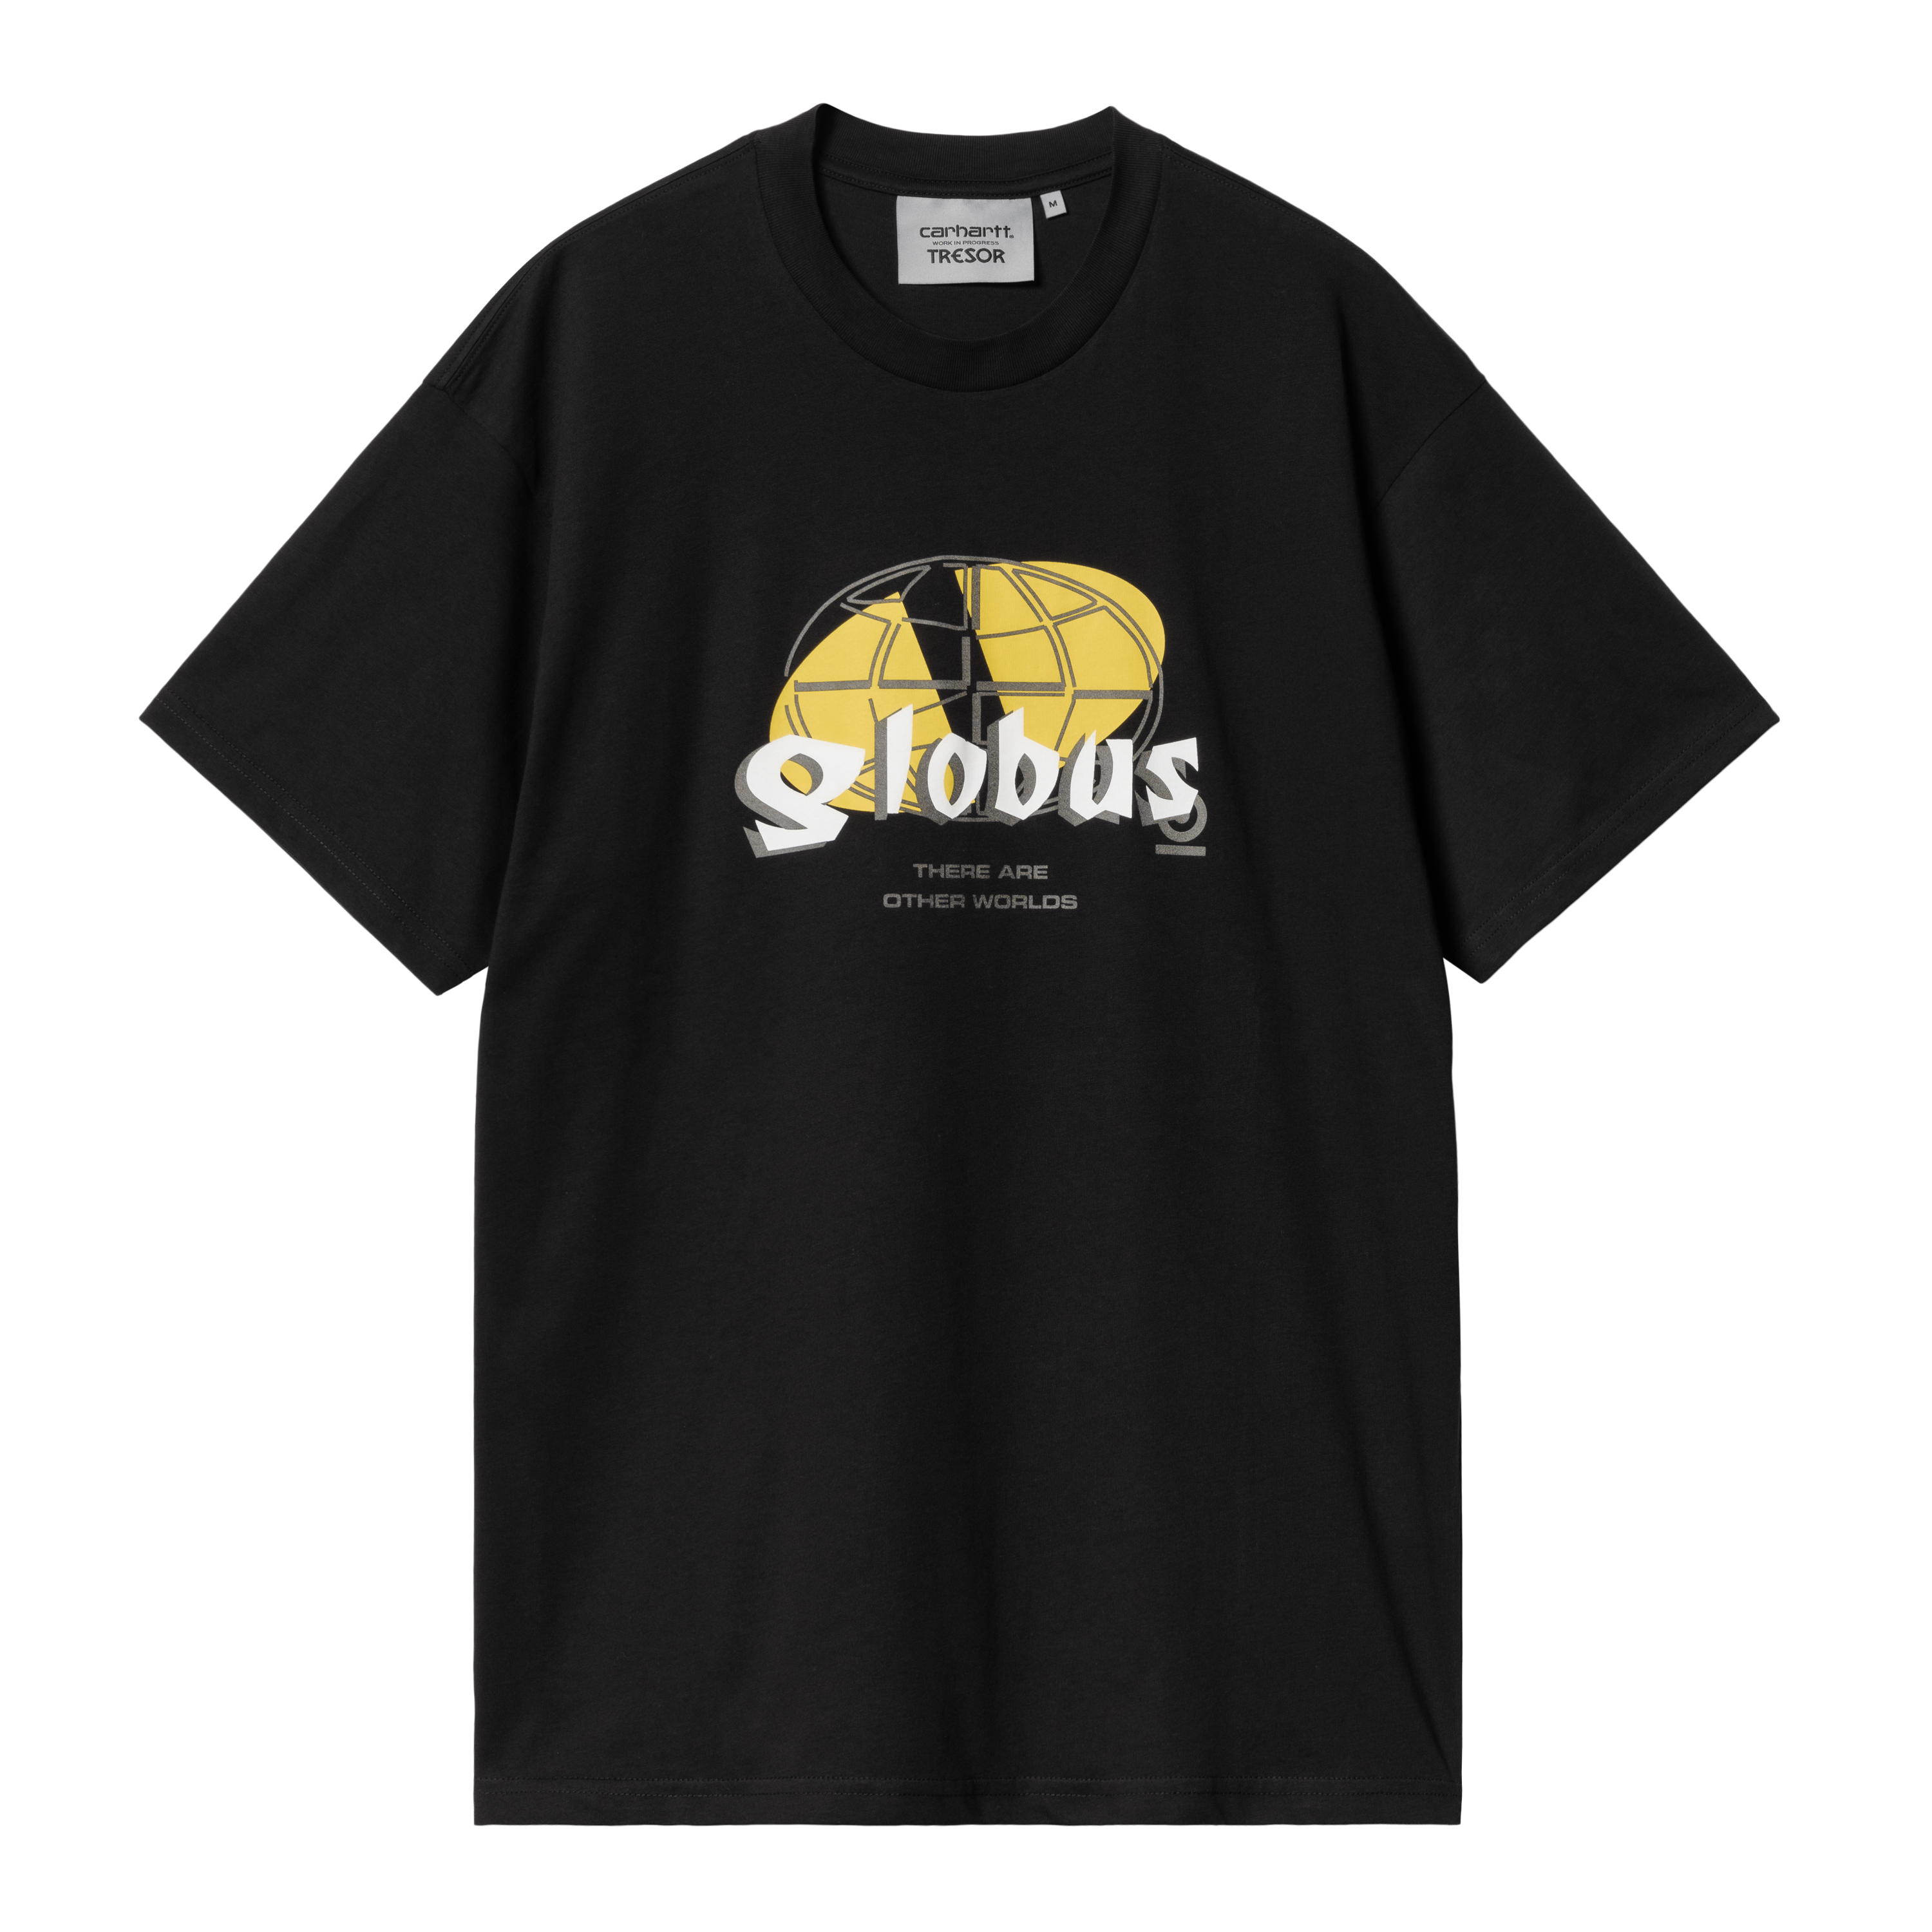 Carhartt WIP Carhartt WIP x TRESOR Globus Short Sleeve T-Shirt Noir